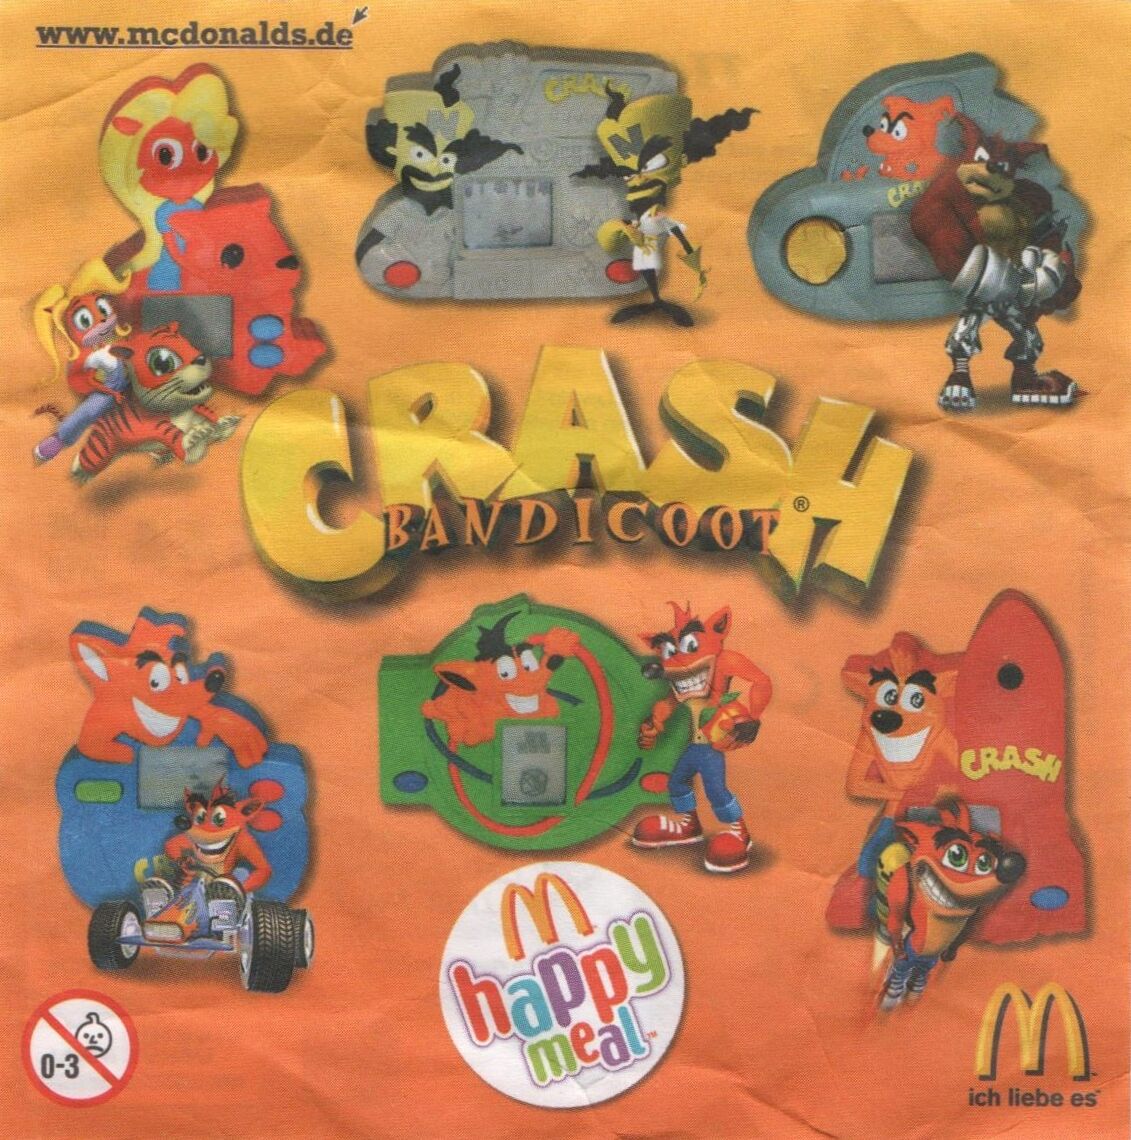 Crash Bandicoot Returns to McDonald's Happy Meals - Anime Superhero News